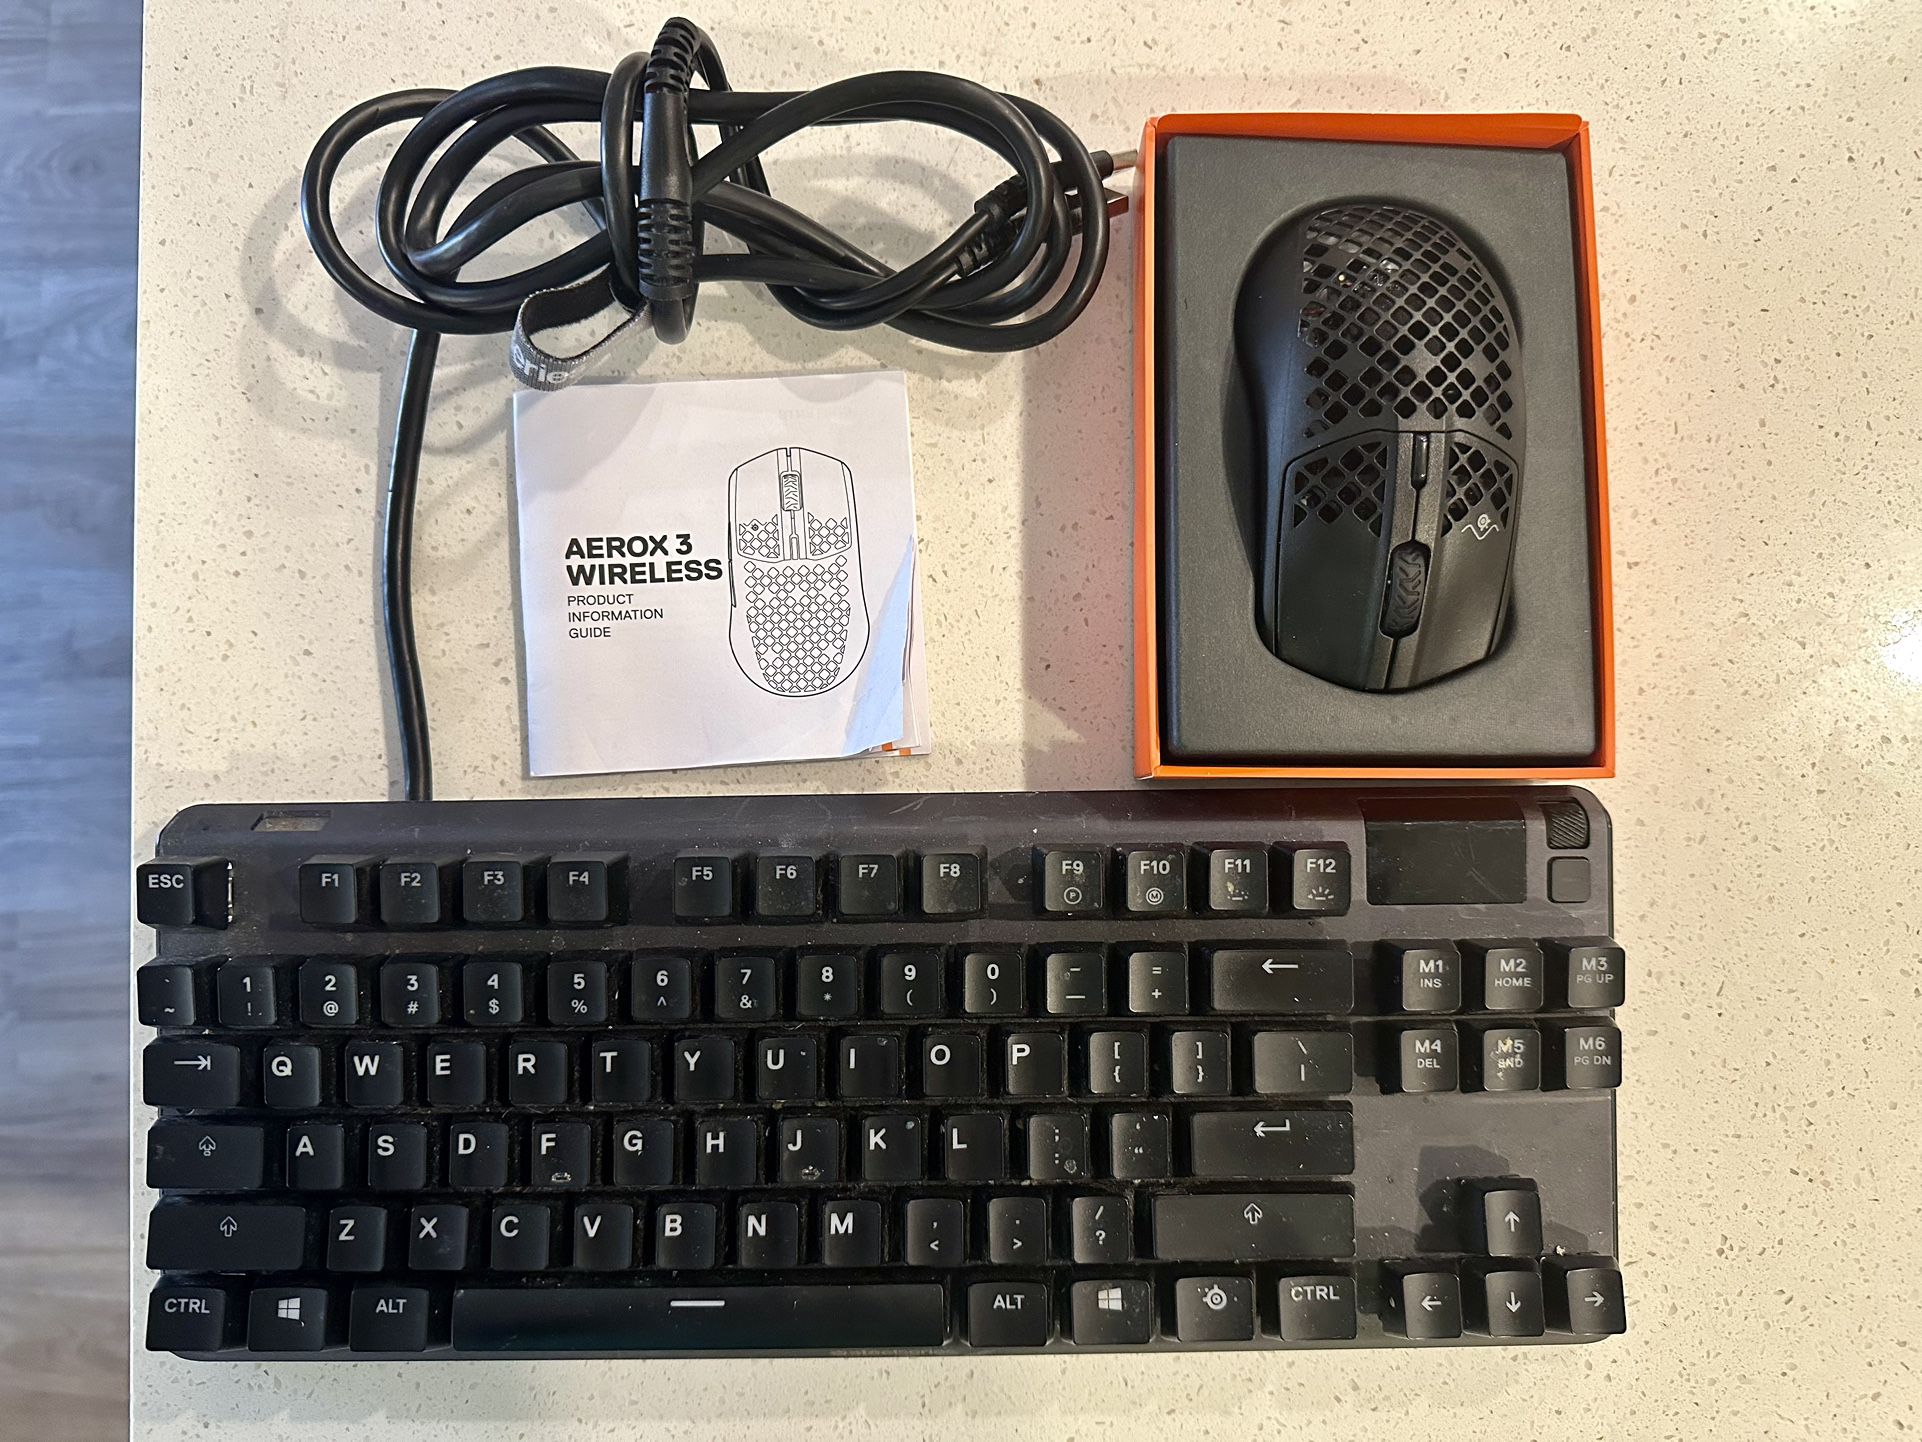 Steel Series Gaming Keyboard & Wireless Mouse